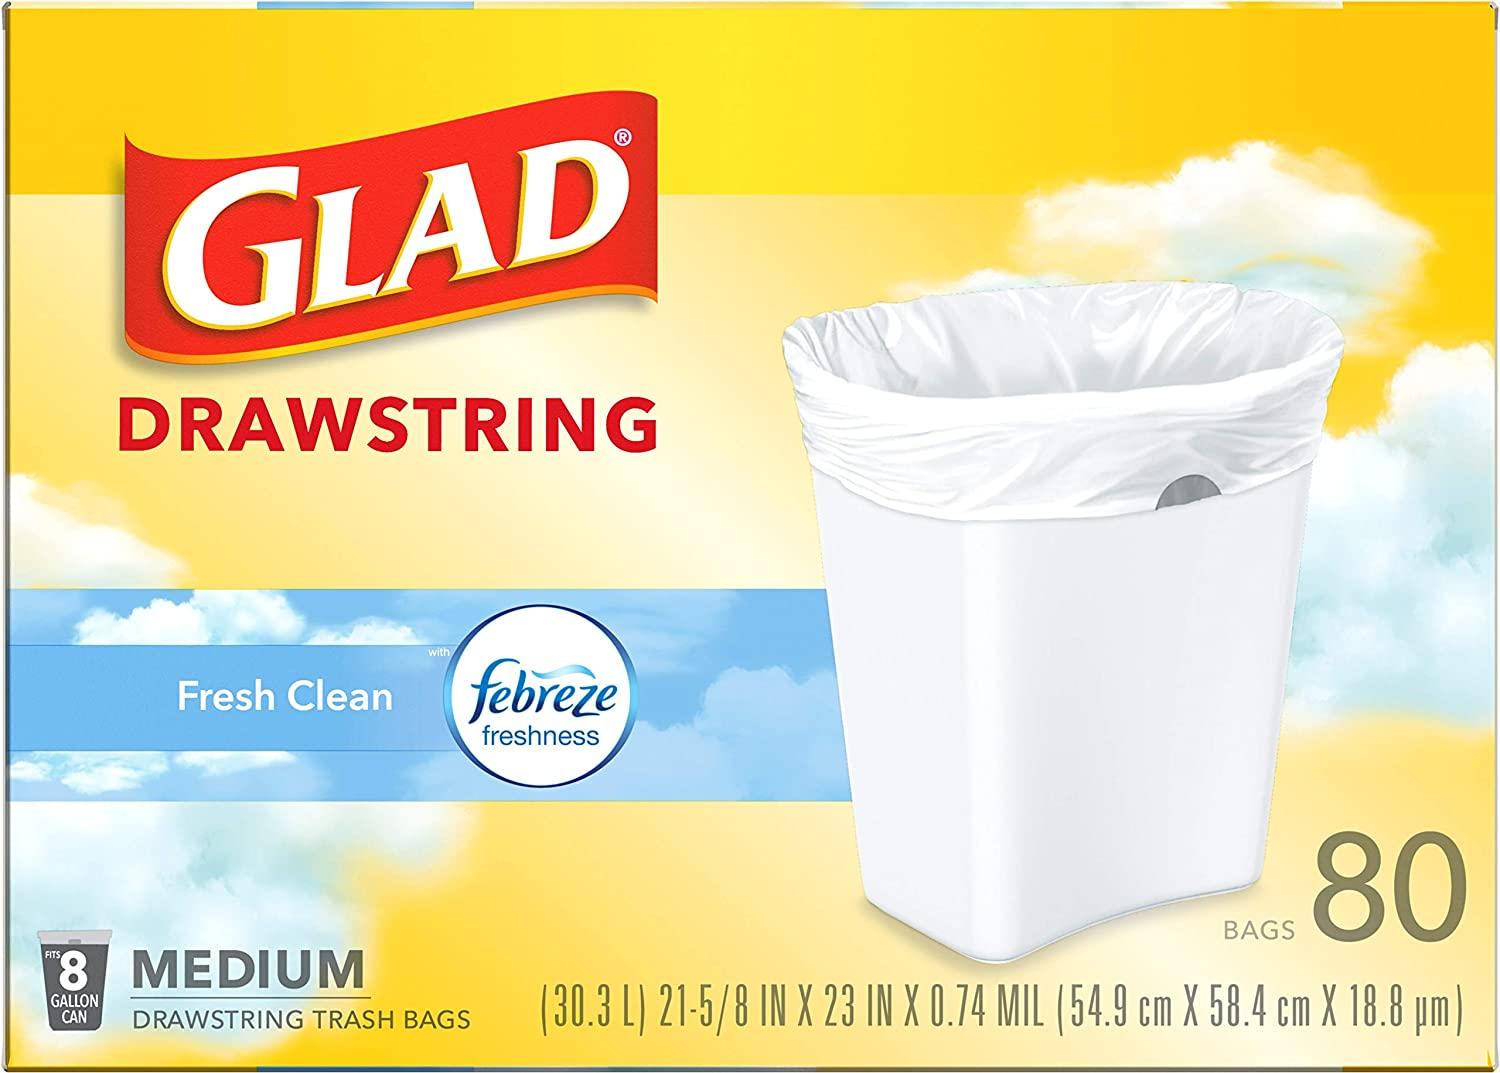 Glad Medium Drawstring Trash Bags, 8 Gallon, White, Gain Original Scent  with Febreze Freshness, 80 Count